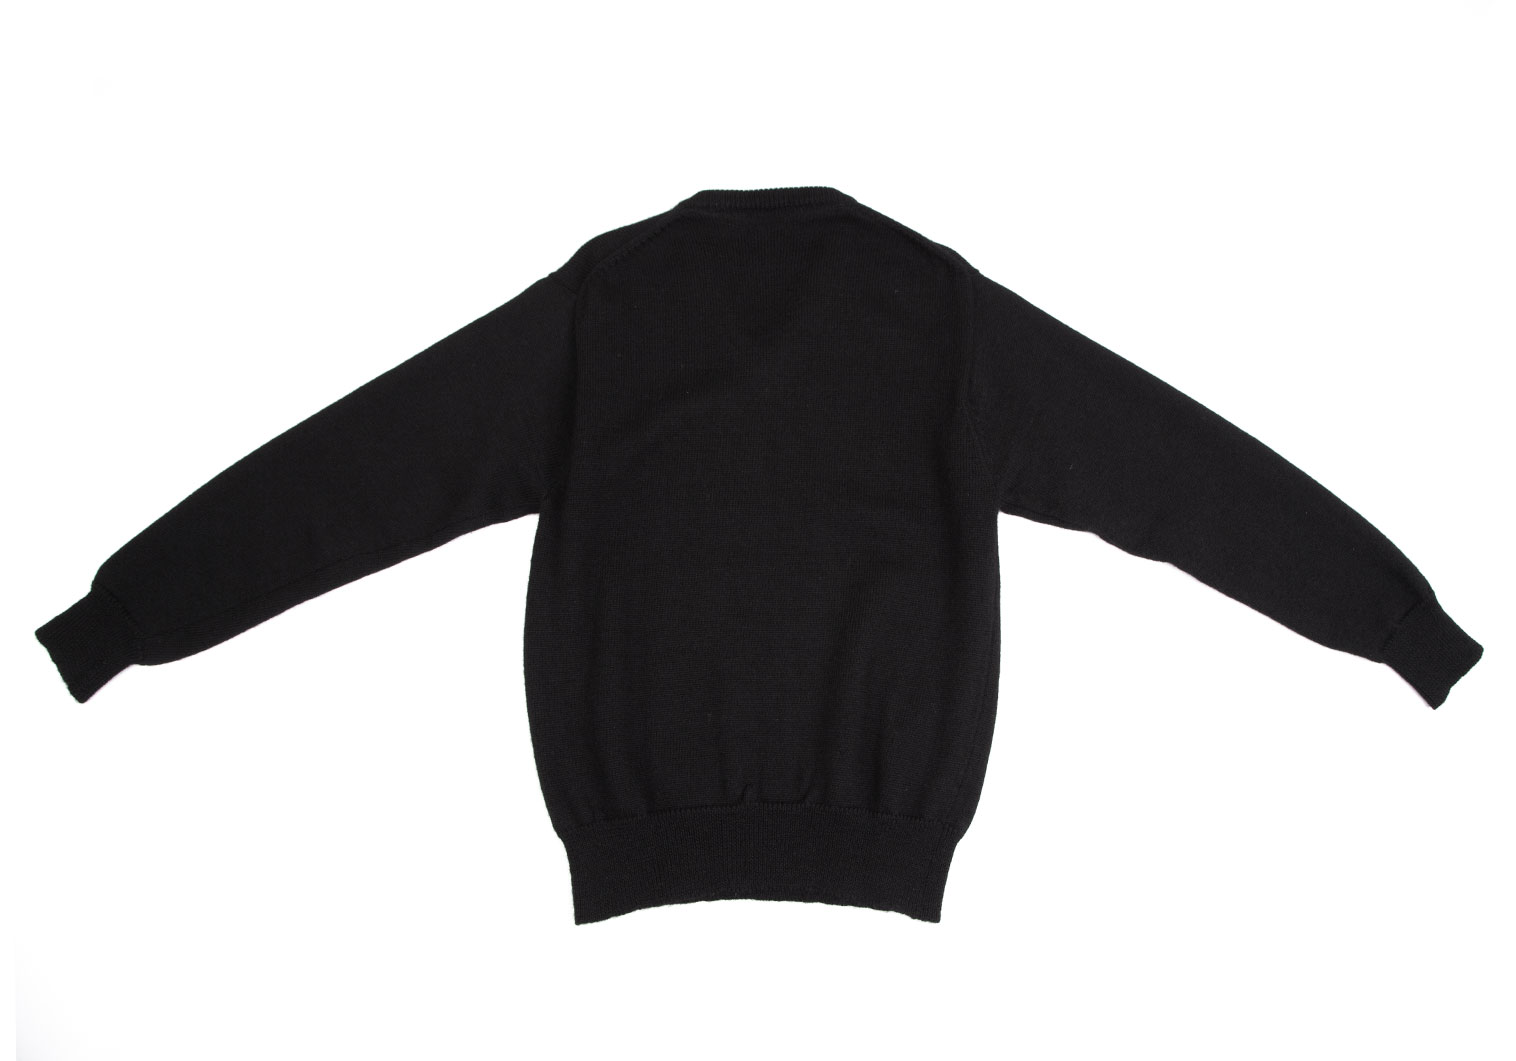 39sformenサイズY's for men ワイズフォーメン 初期 デザインニット セーター 黒